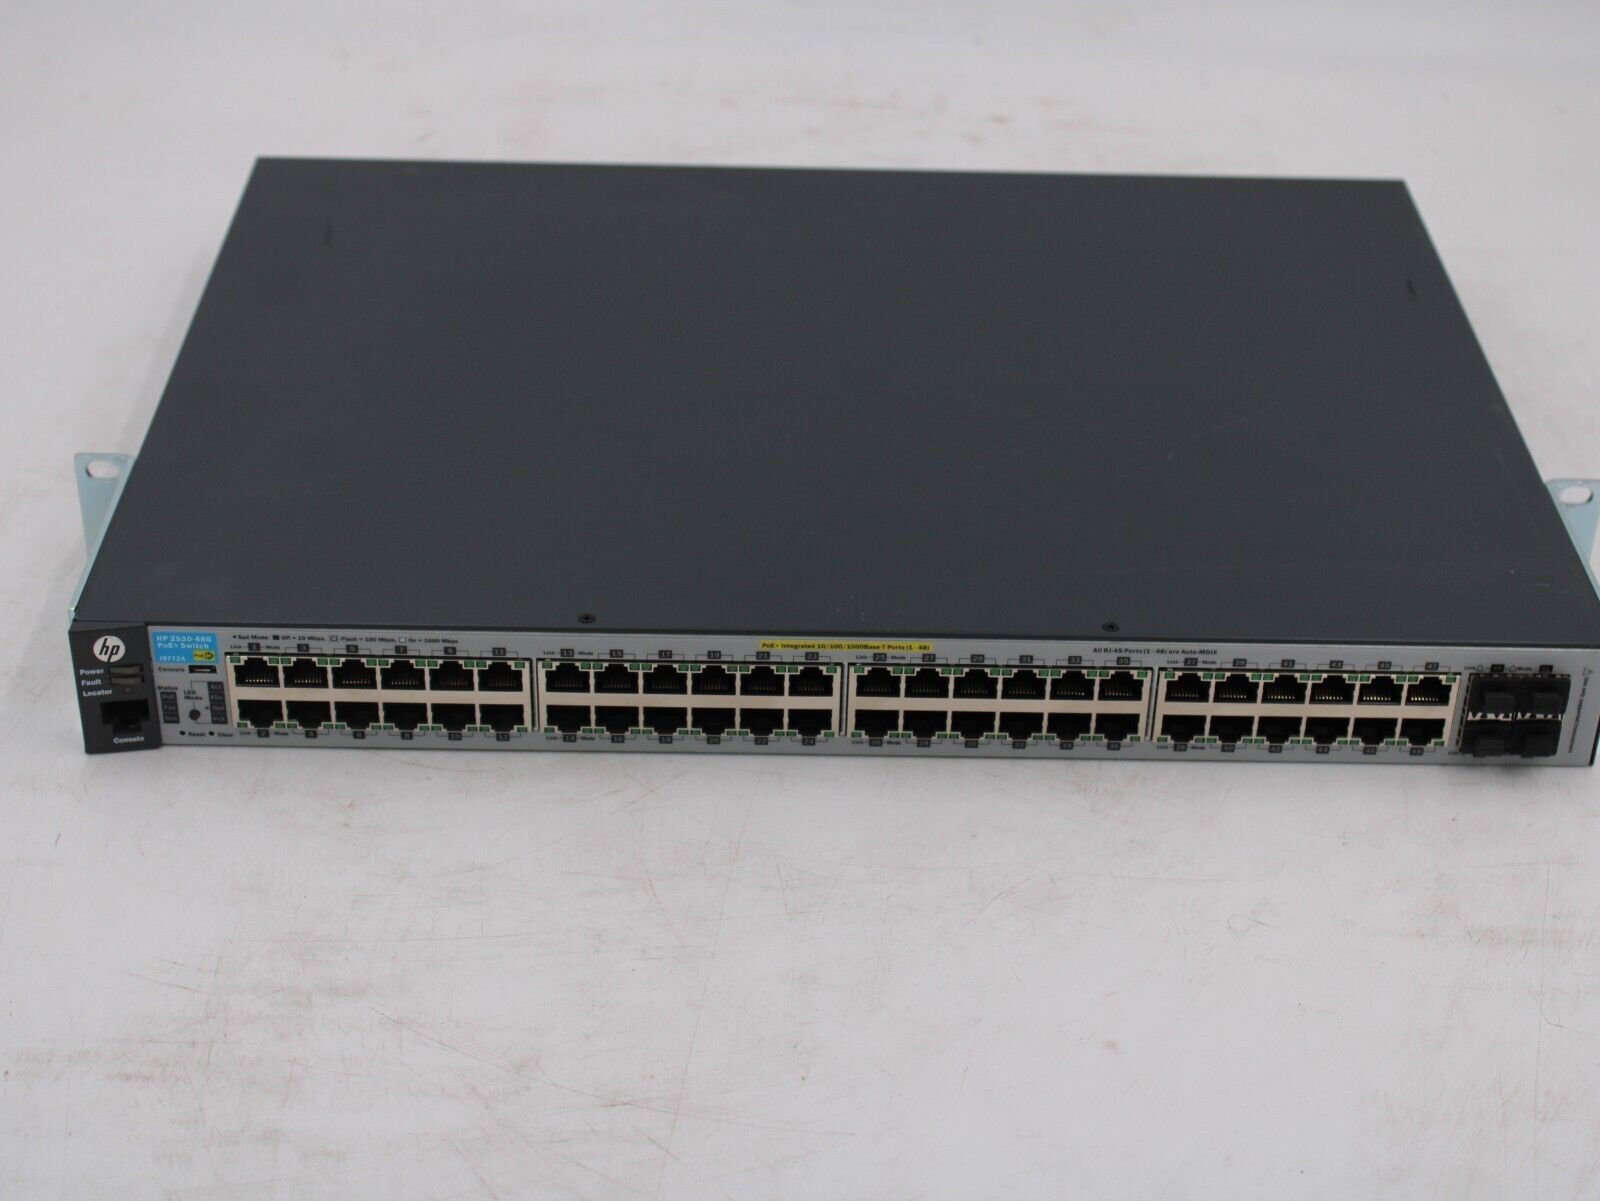 HP ProCurve 2530-48G-POE J9772A 48 Port Gigabit Ethernet Network Switch